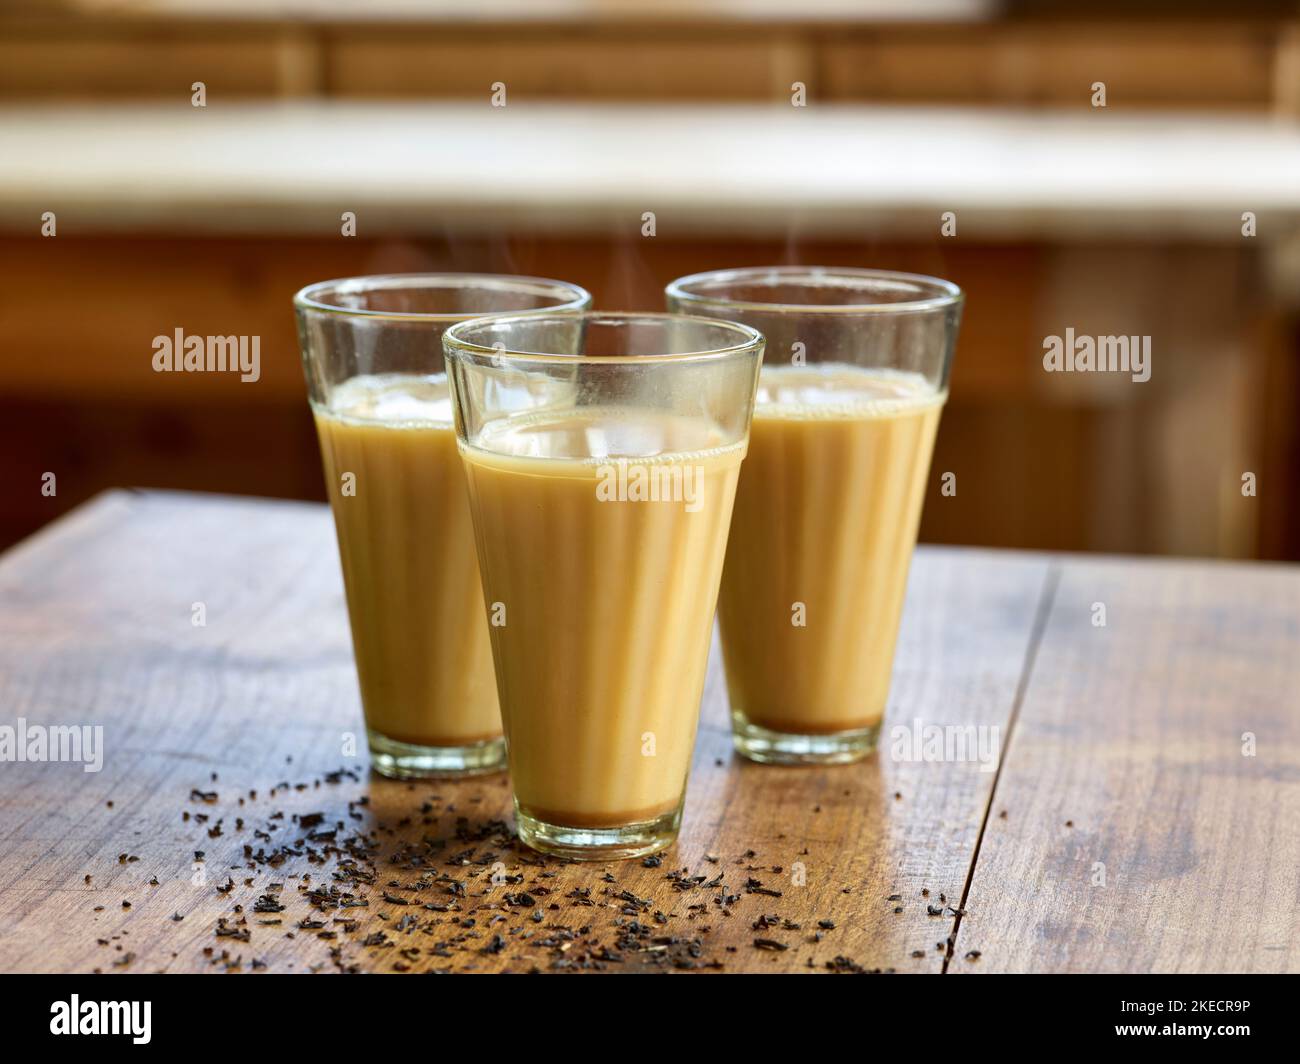 ayurvedic cuisine, three glasses of Golden Chai tea with milk or oat milk Stock Photo